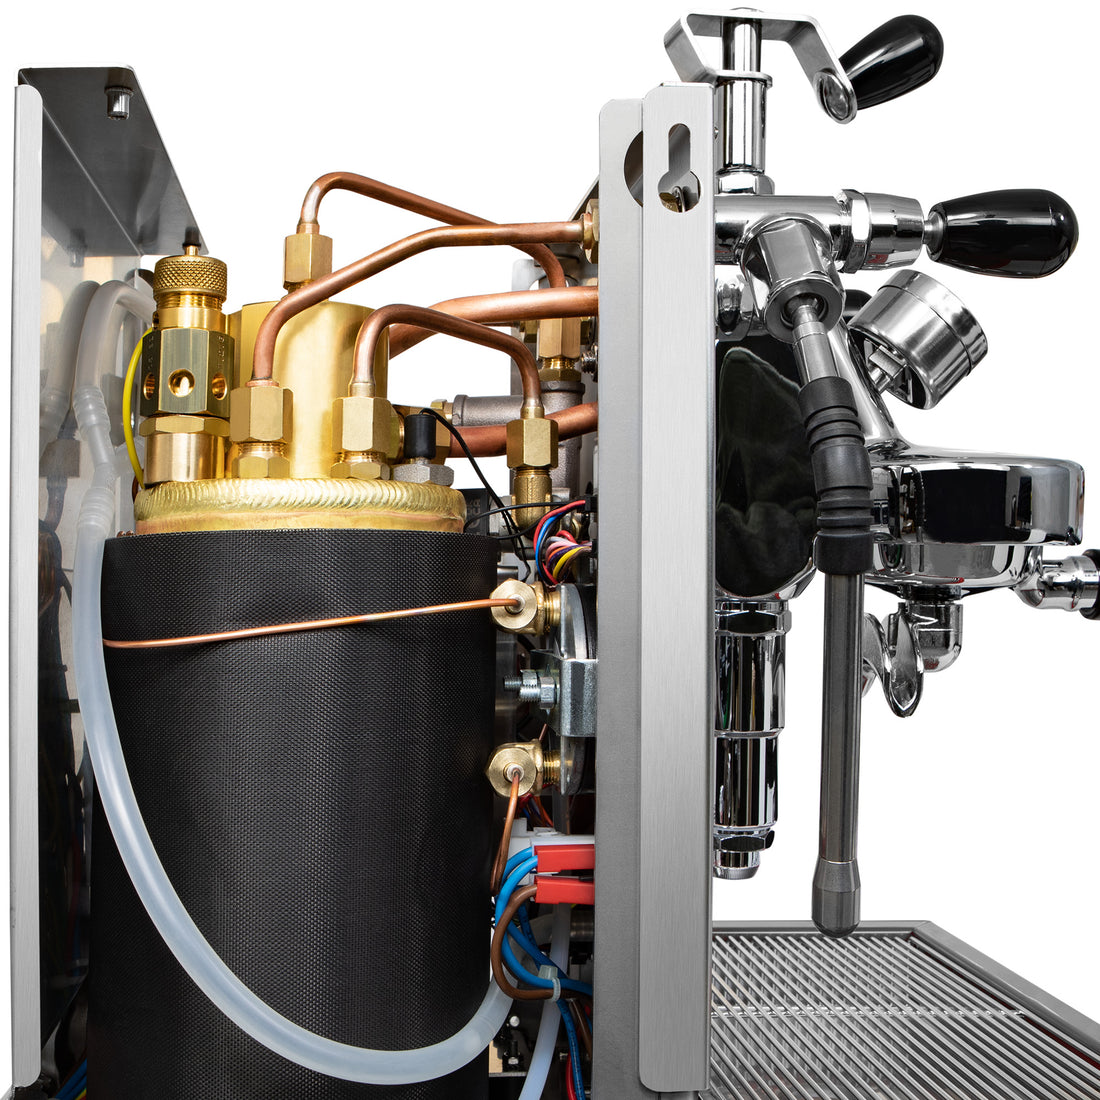 Bezzera Aria PID Espresso Machine with Flow Control - Black with Rosewood